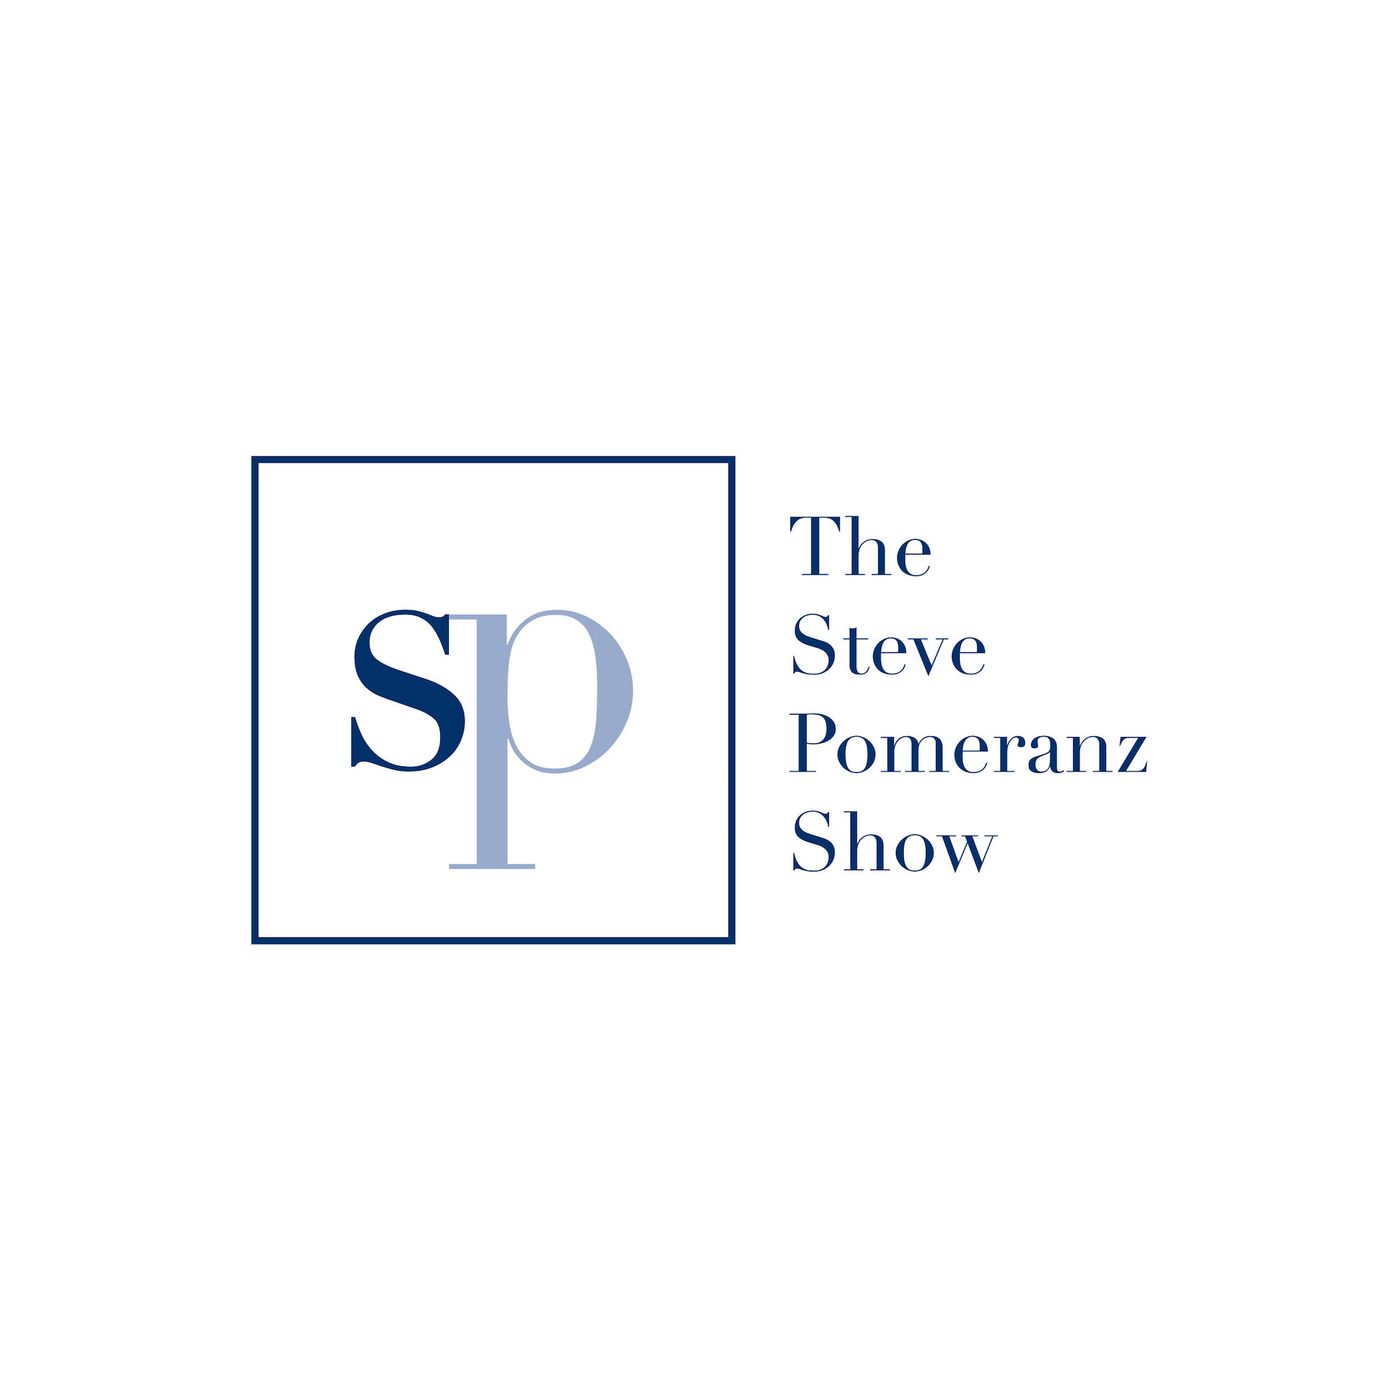 The Steve Pomeranz Show